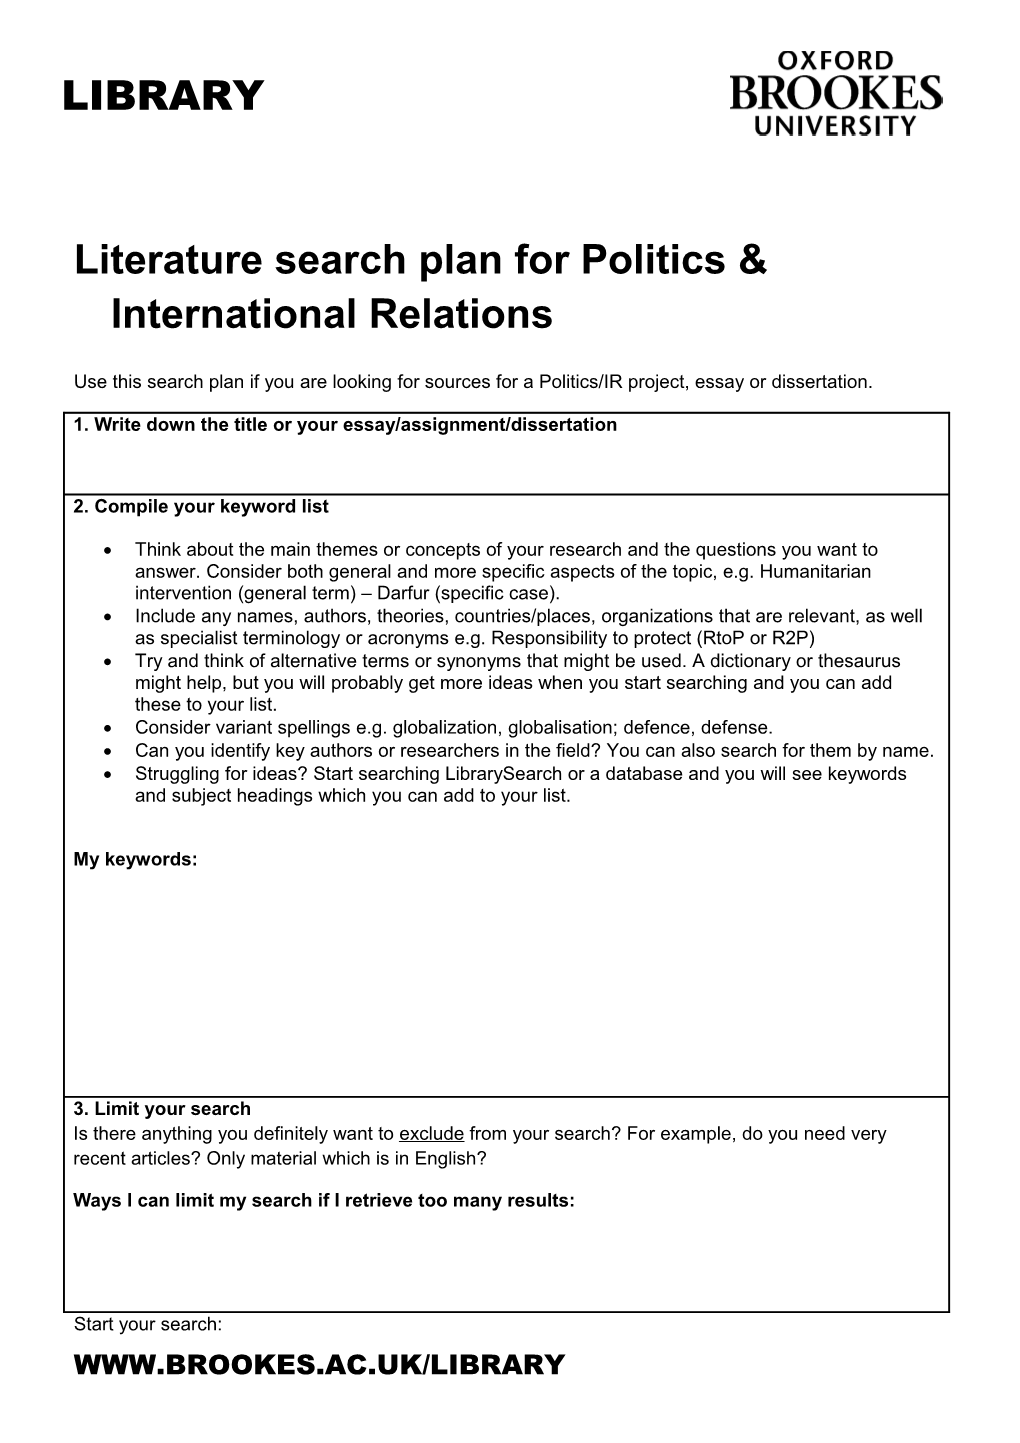 Literature Search Planfor Politics & International Relations